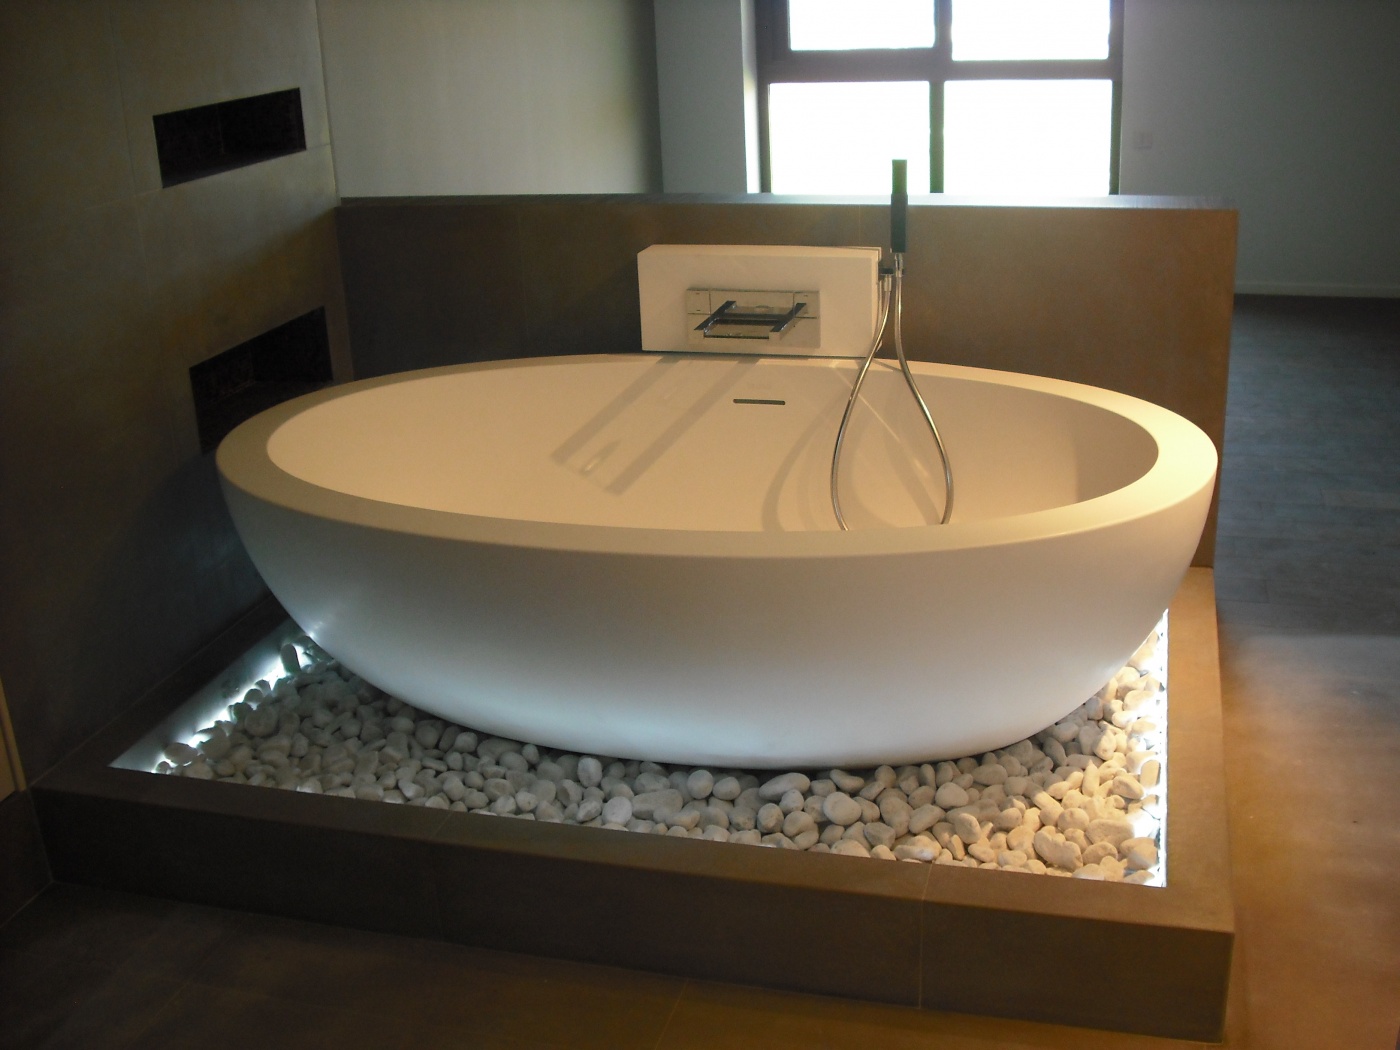 Limestone Salle de bain design en pierre Gris Barcelone
Baignoire Boffi